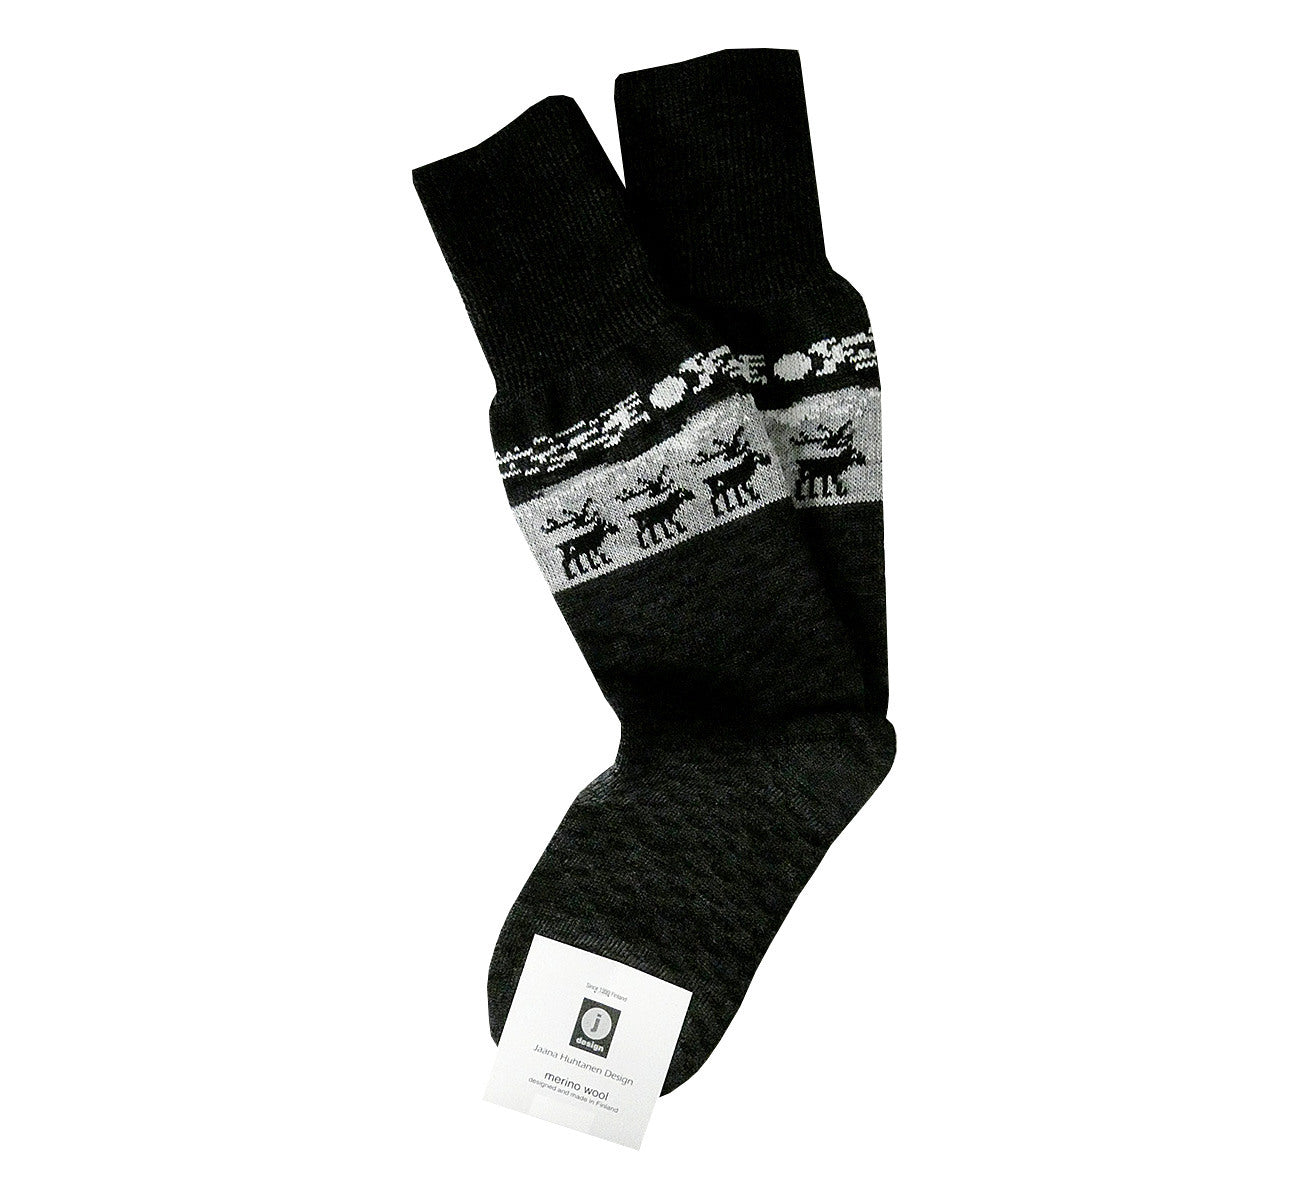 Pair of dark gray with light gray merino wool socks, Lapland reindeer pattern, superwarm, resistant, ethically made in Scandinavia.